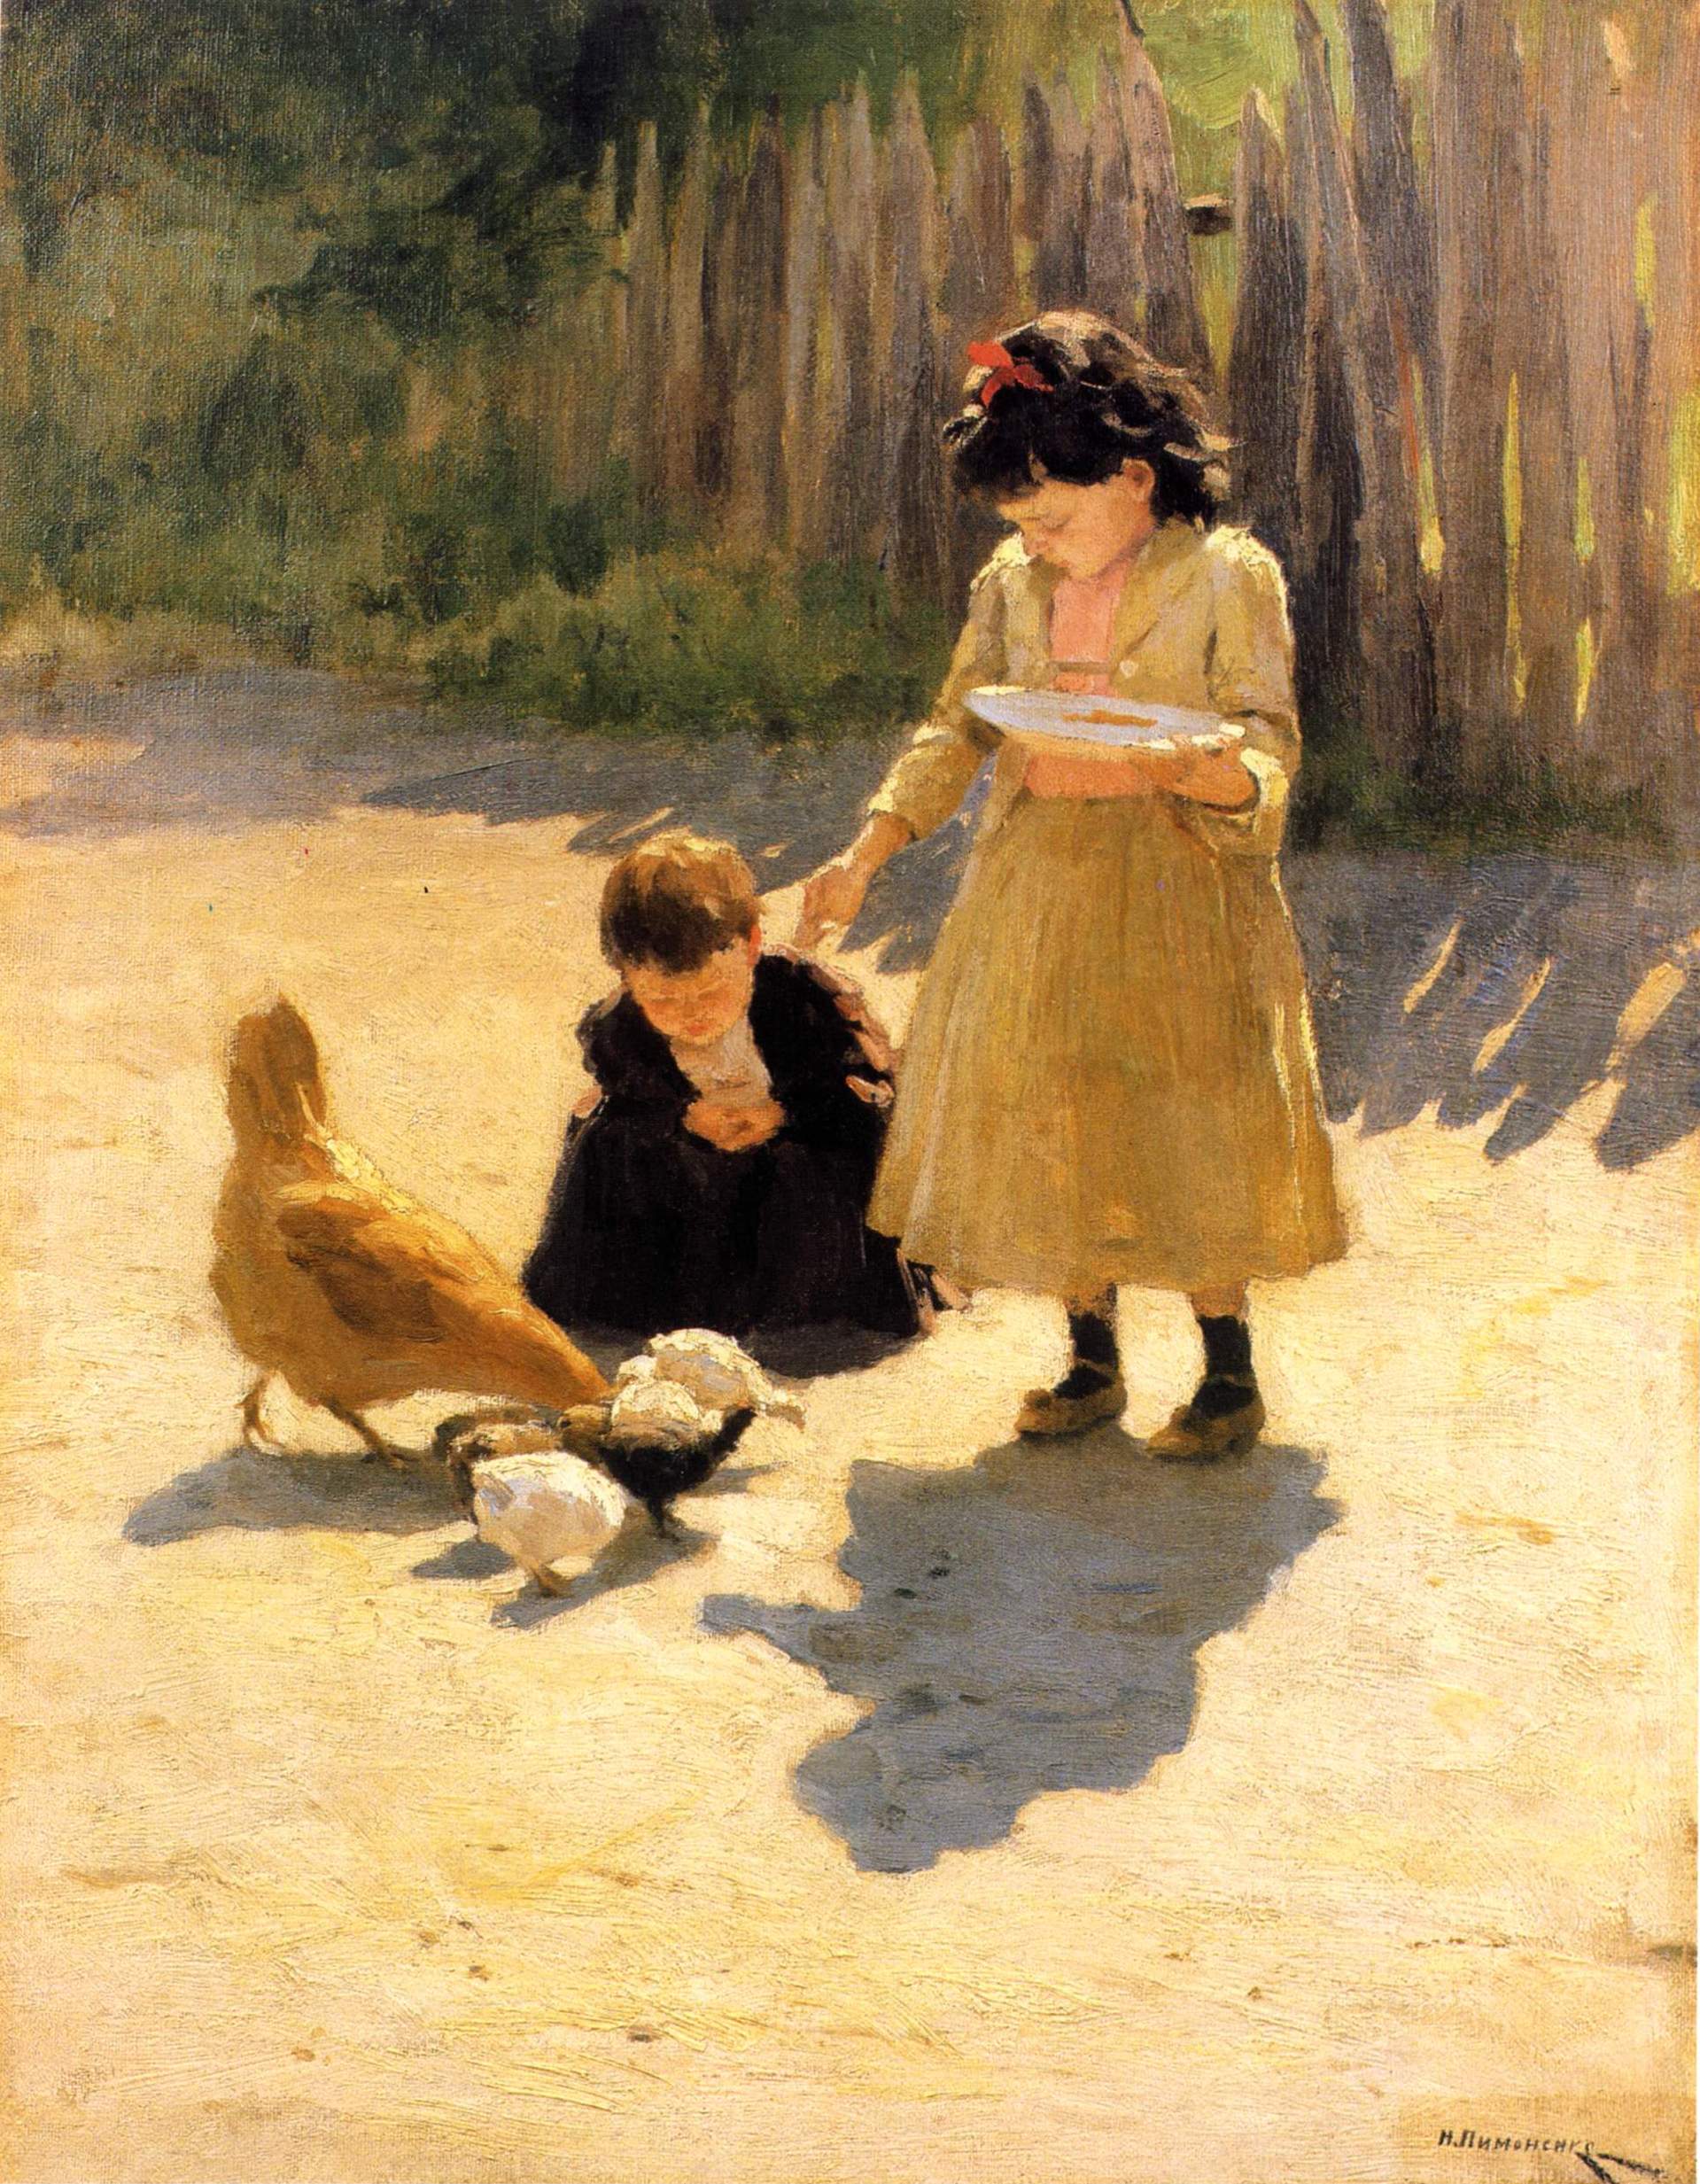 Пимоненко. Дети художника . Начало 1900-х